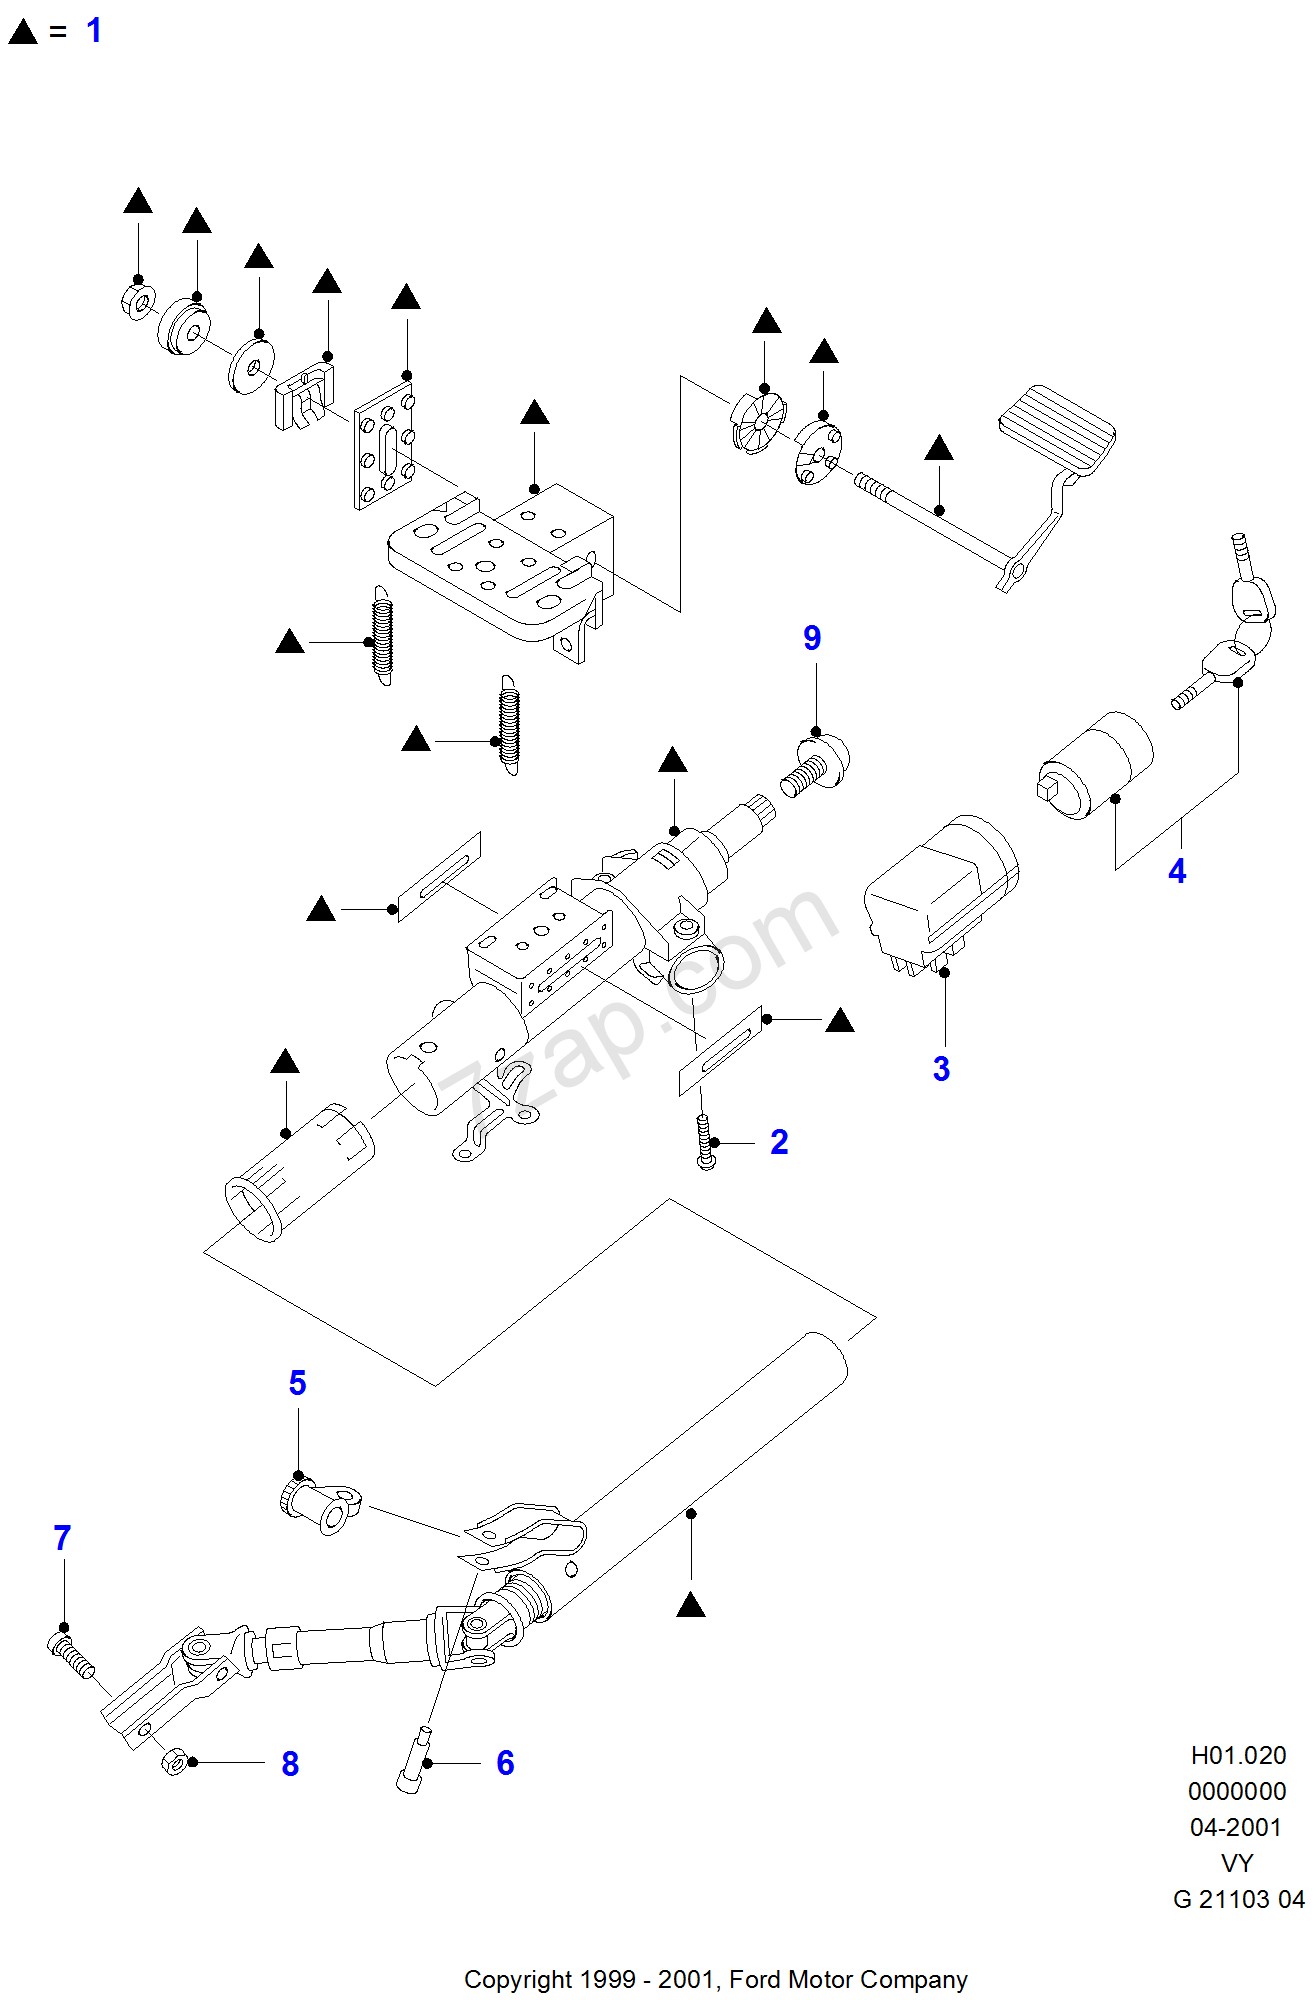 Ford Galaxy Engine Diagram Steering Column Adjustable ford Galaxy 2000 2006 Vy Of Ford Galaxy Engine Diagram